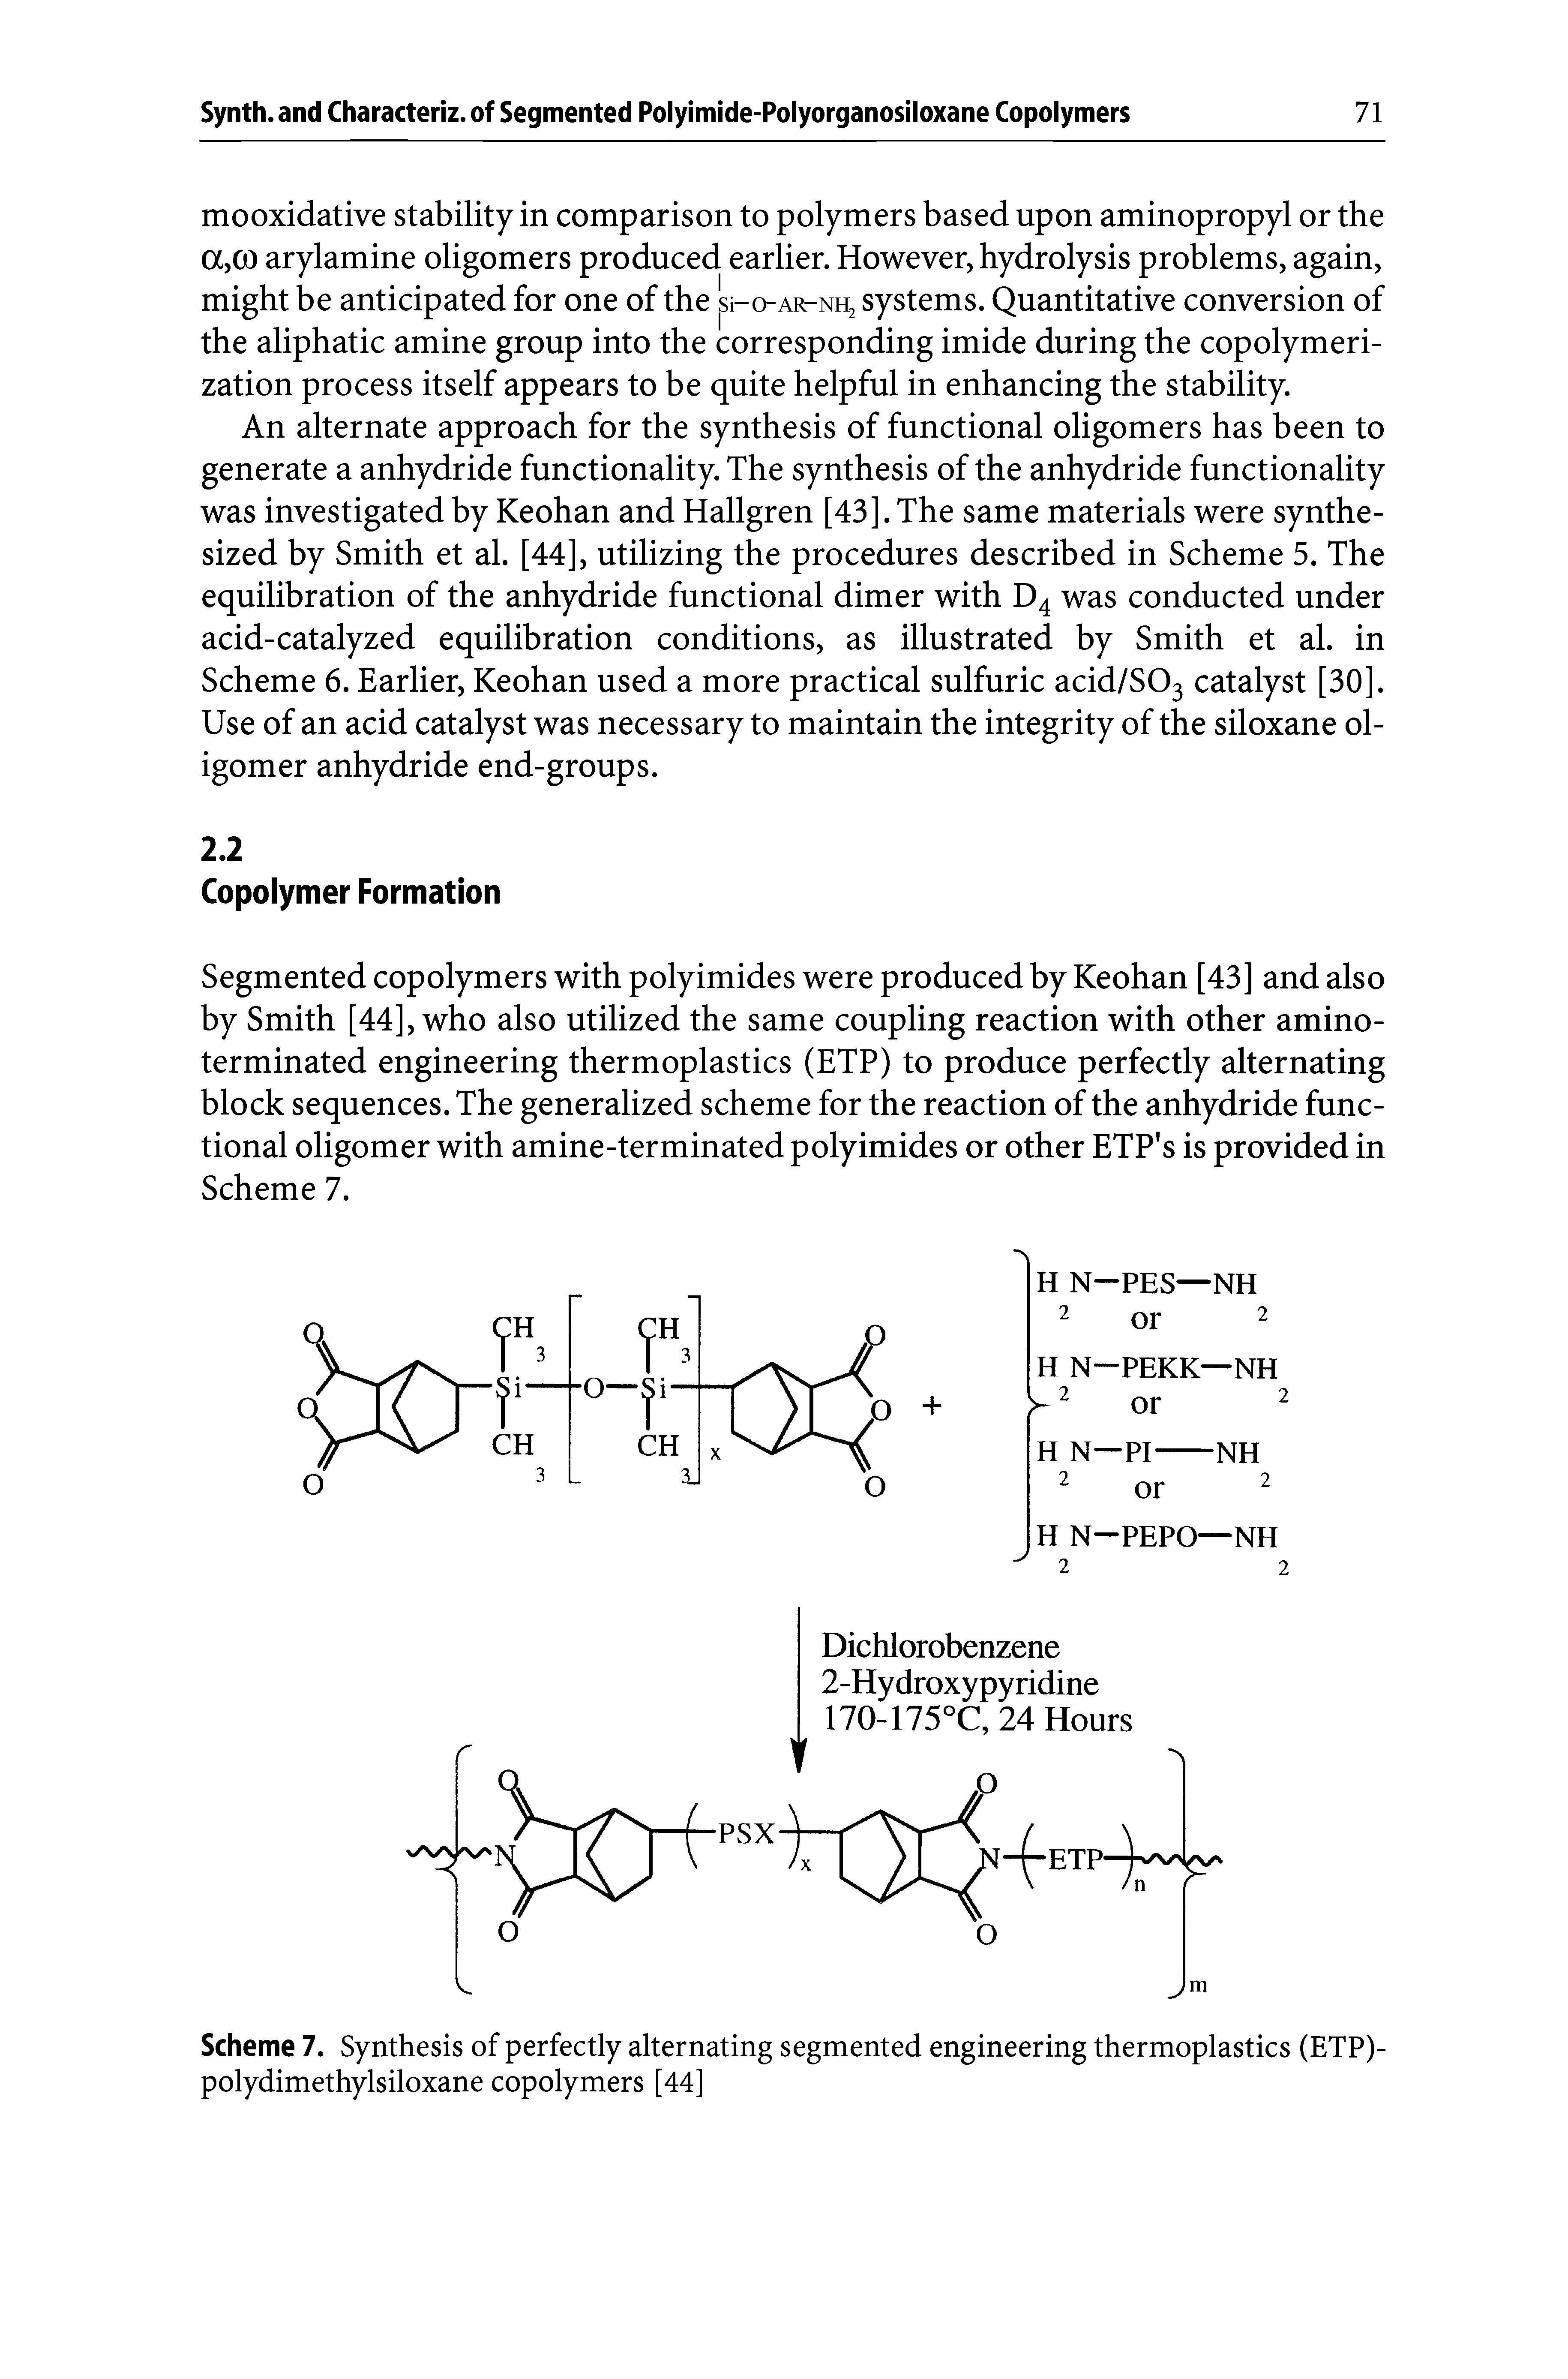 Scheme 7. Synthesis of perfectly alternating segmented engineering thermoplastics (ETP)-polydimethylsiloxane copolymers [44]...